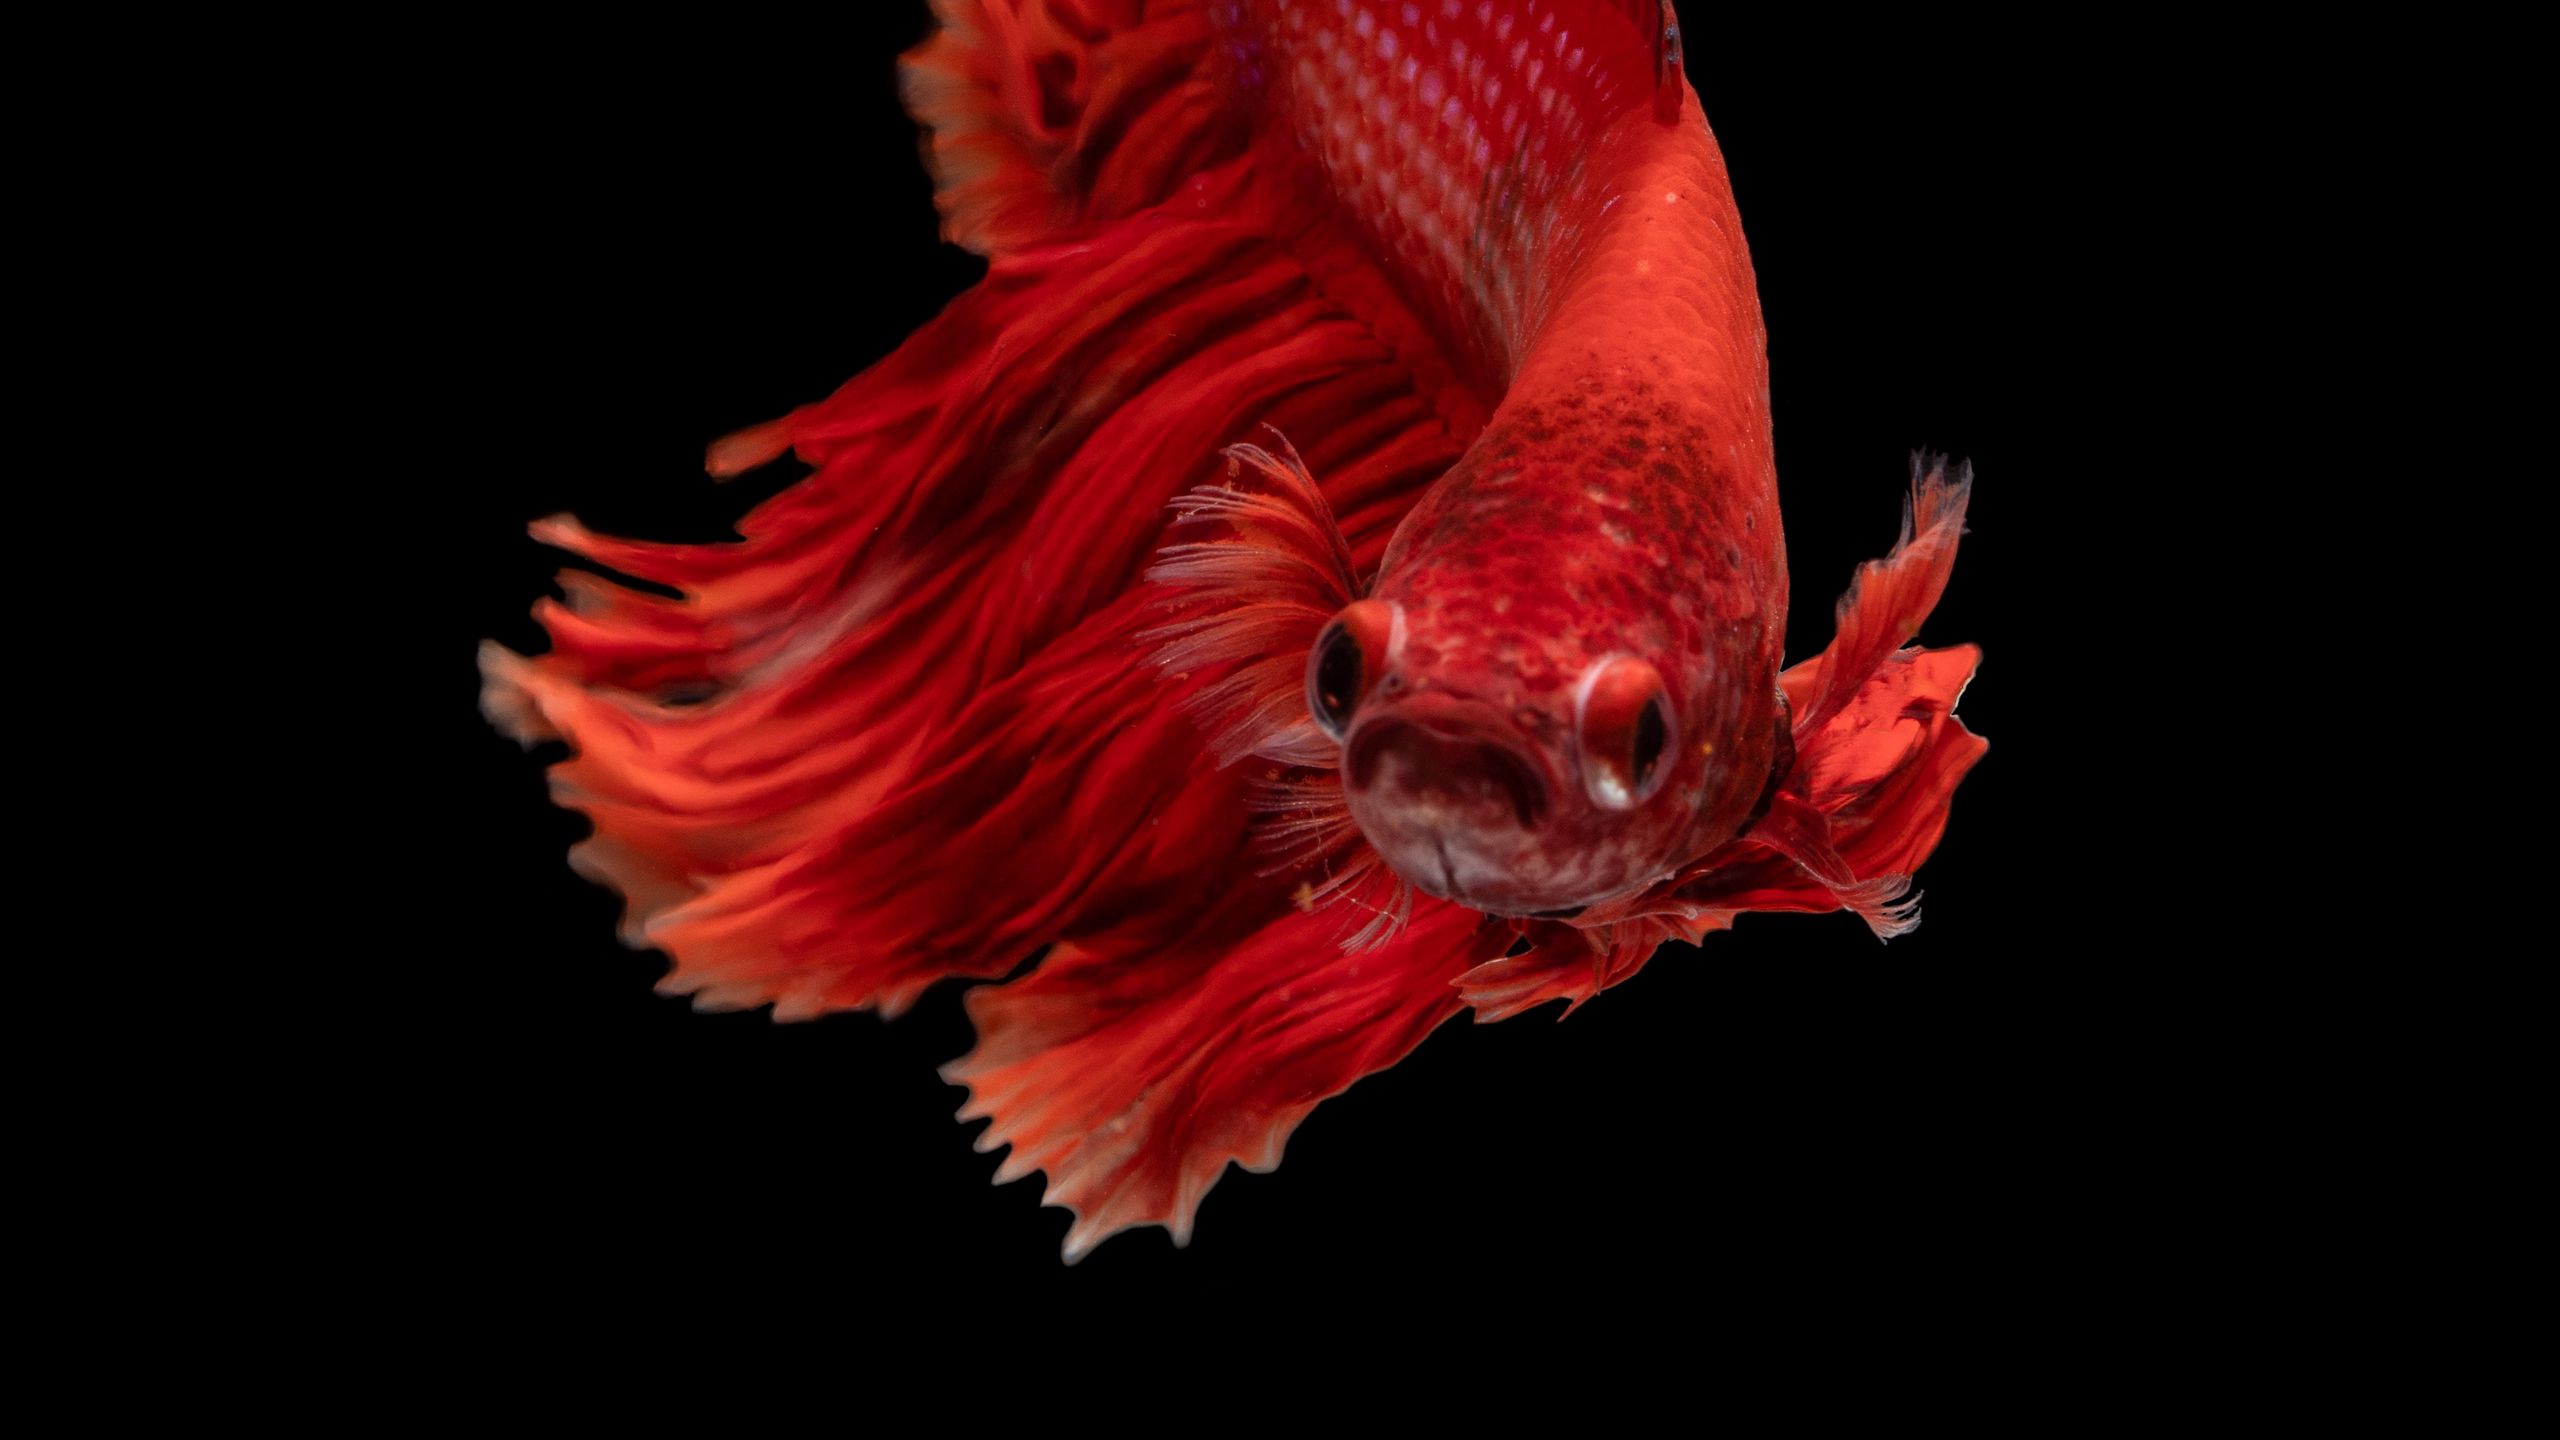 Download wallpaper 2560x1440 fish, red, underwater world, aquarium  widescreen 16:9 hd background